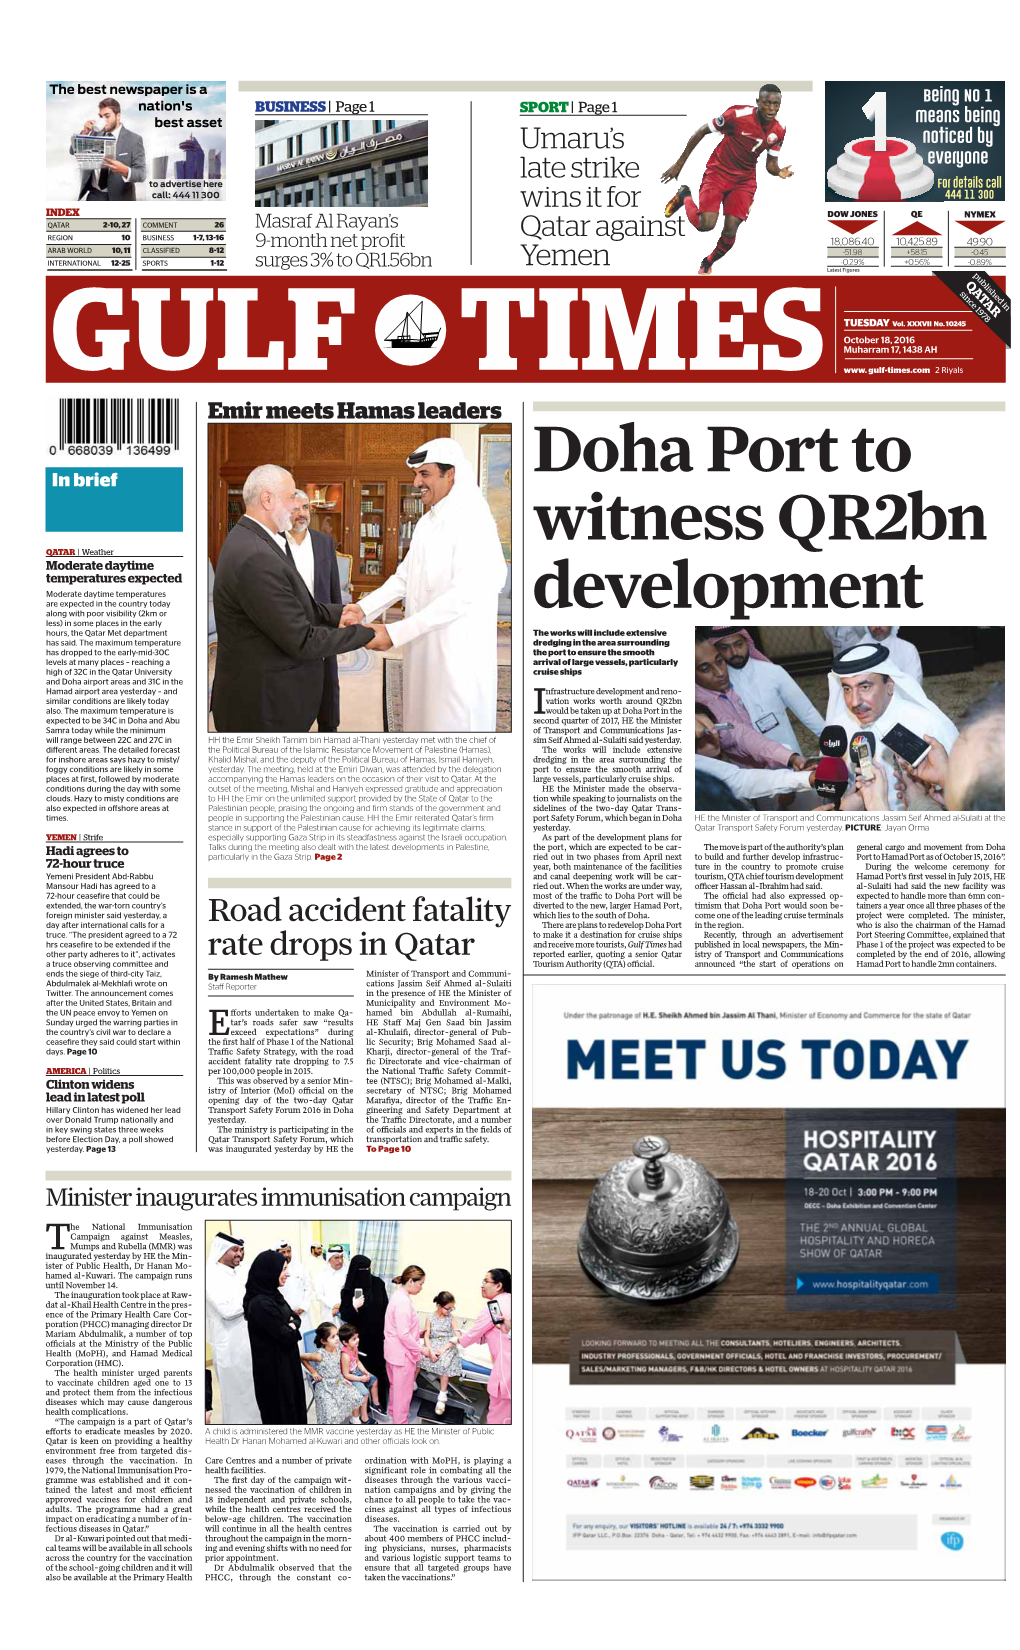 Doha Port to Witness Qr2bn Development